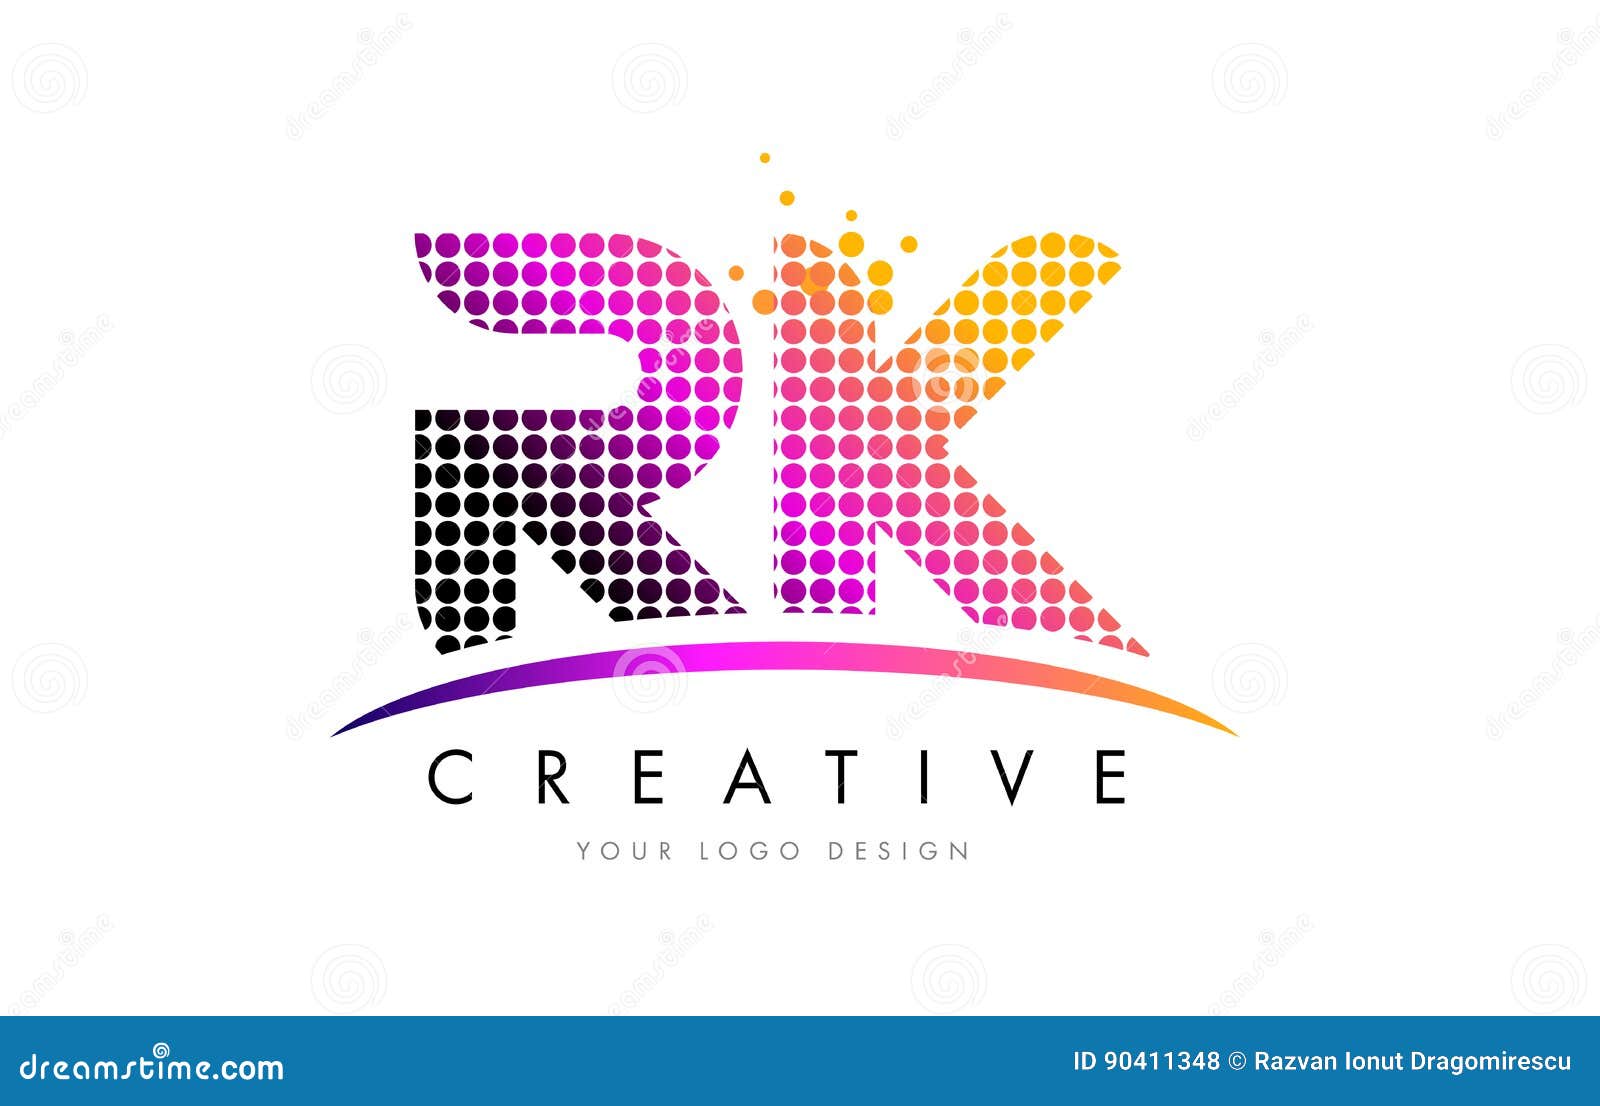 Rk logo Stock Photos and Images | agefotostock